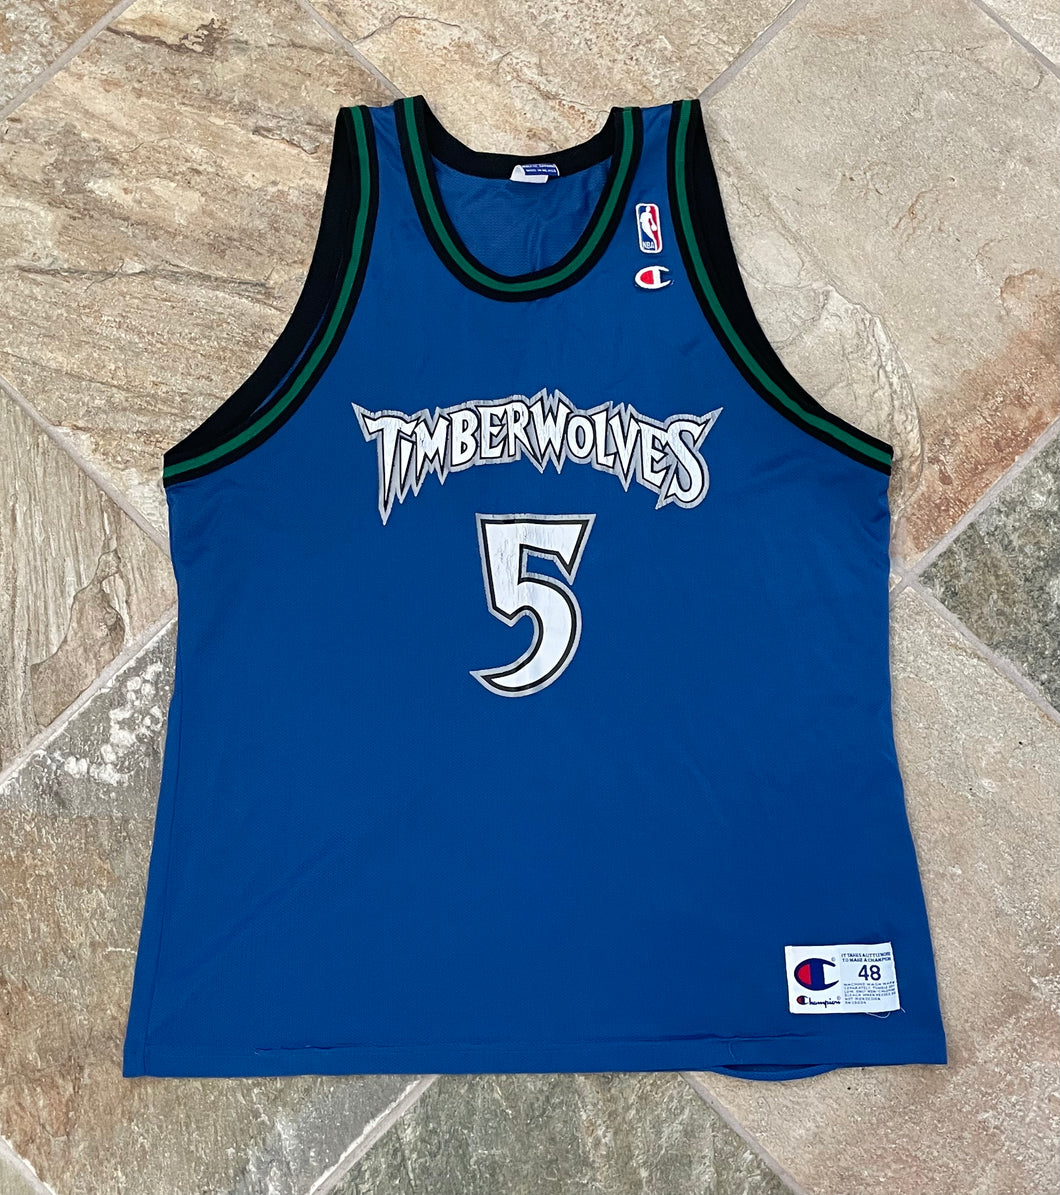 Vintage Minnesota Timberwolves William Avery Champion Basketball Jersey, Size 48, XL